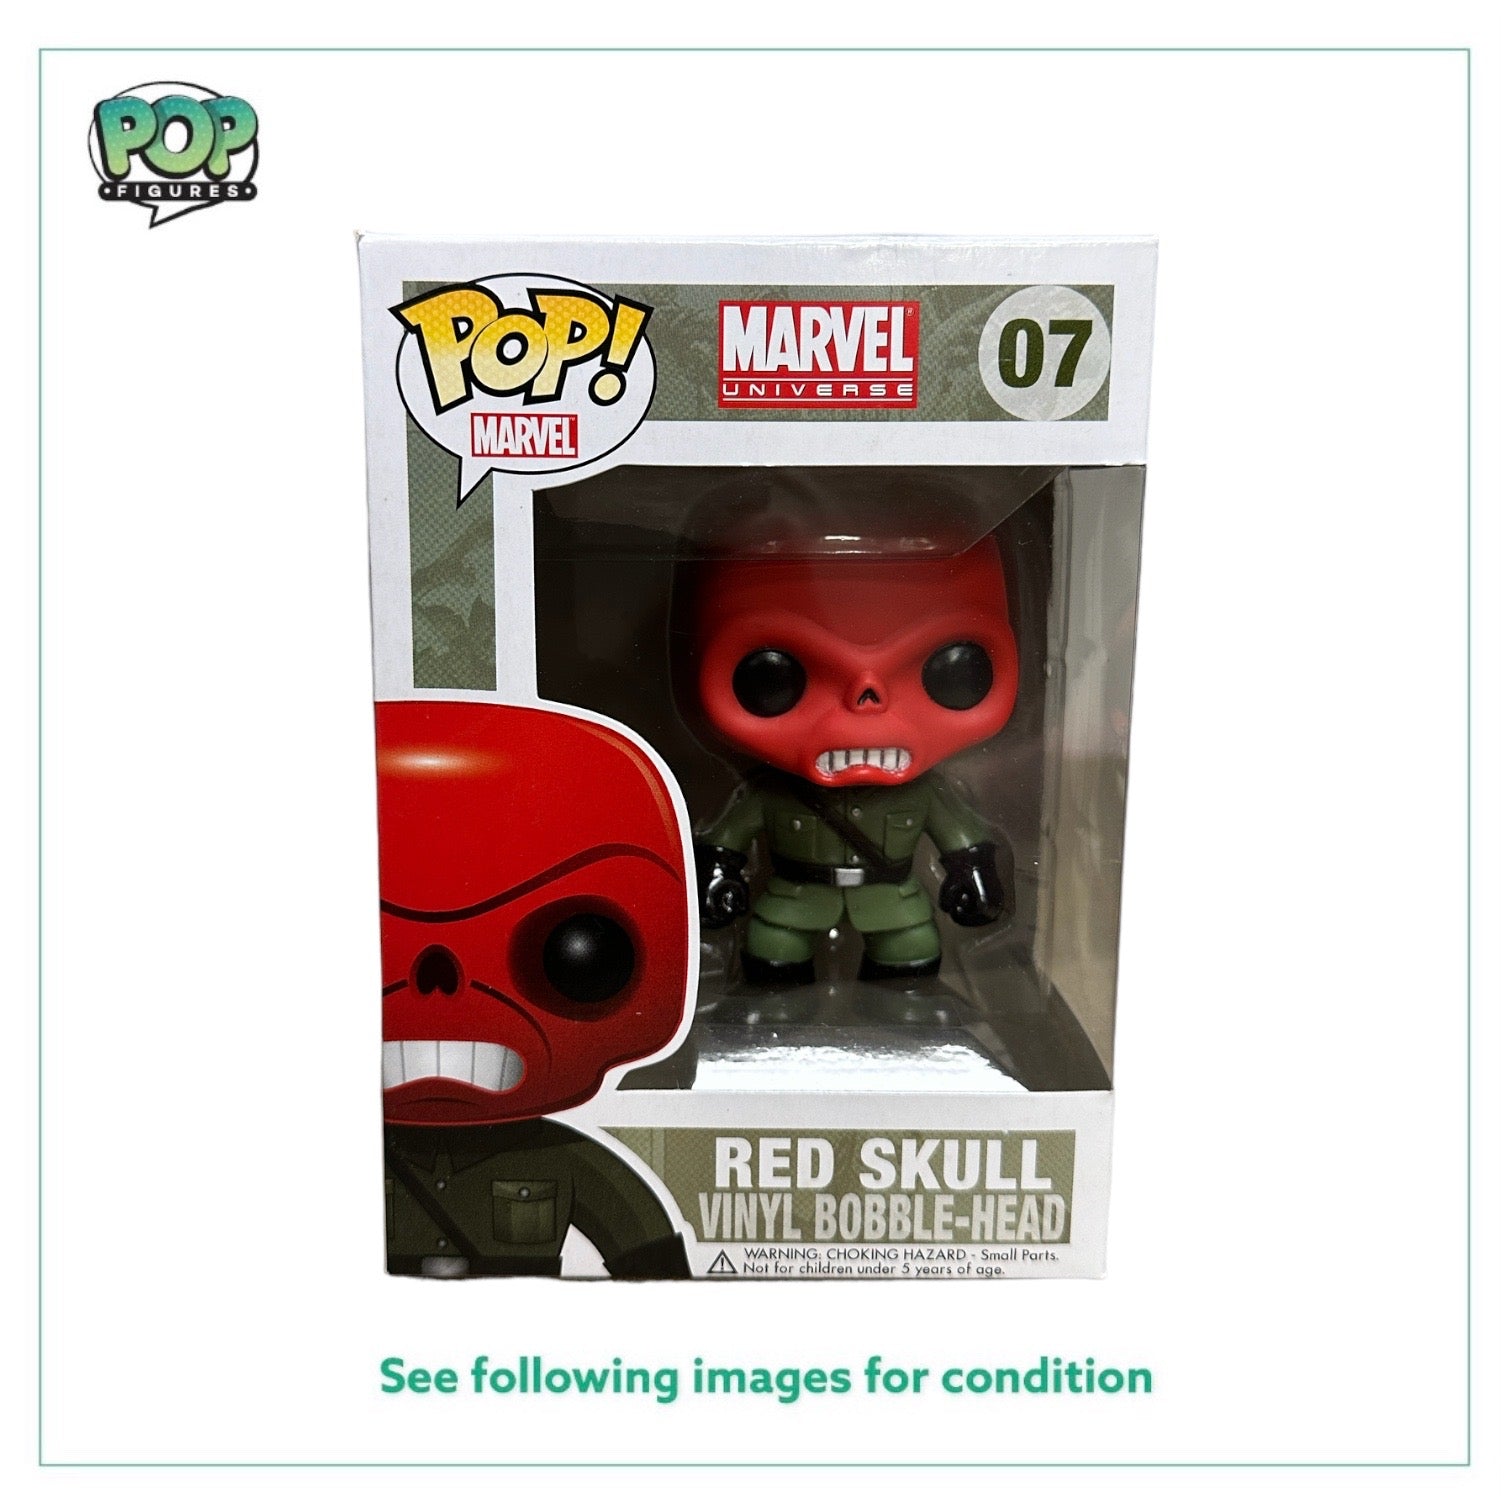 Red Skull #07 Funko Pop! - Marvel Universe - 2011 Pop! - Condition 8.5/10